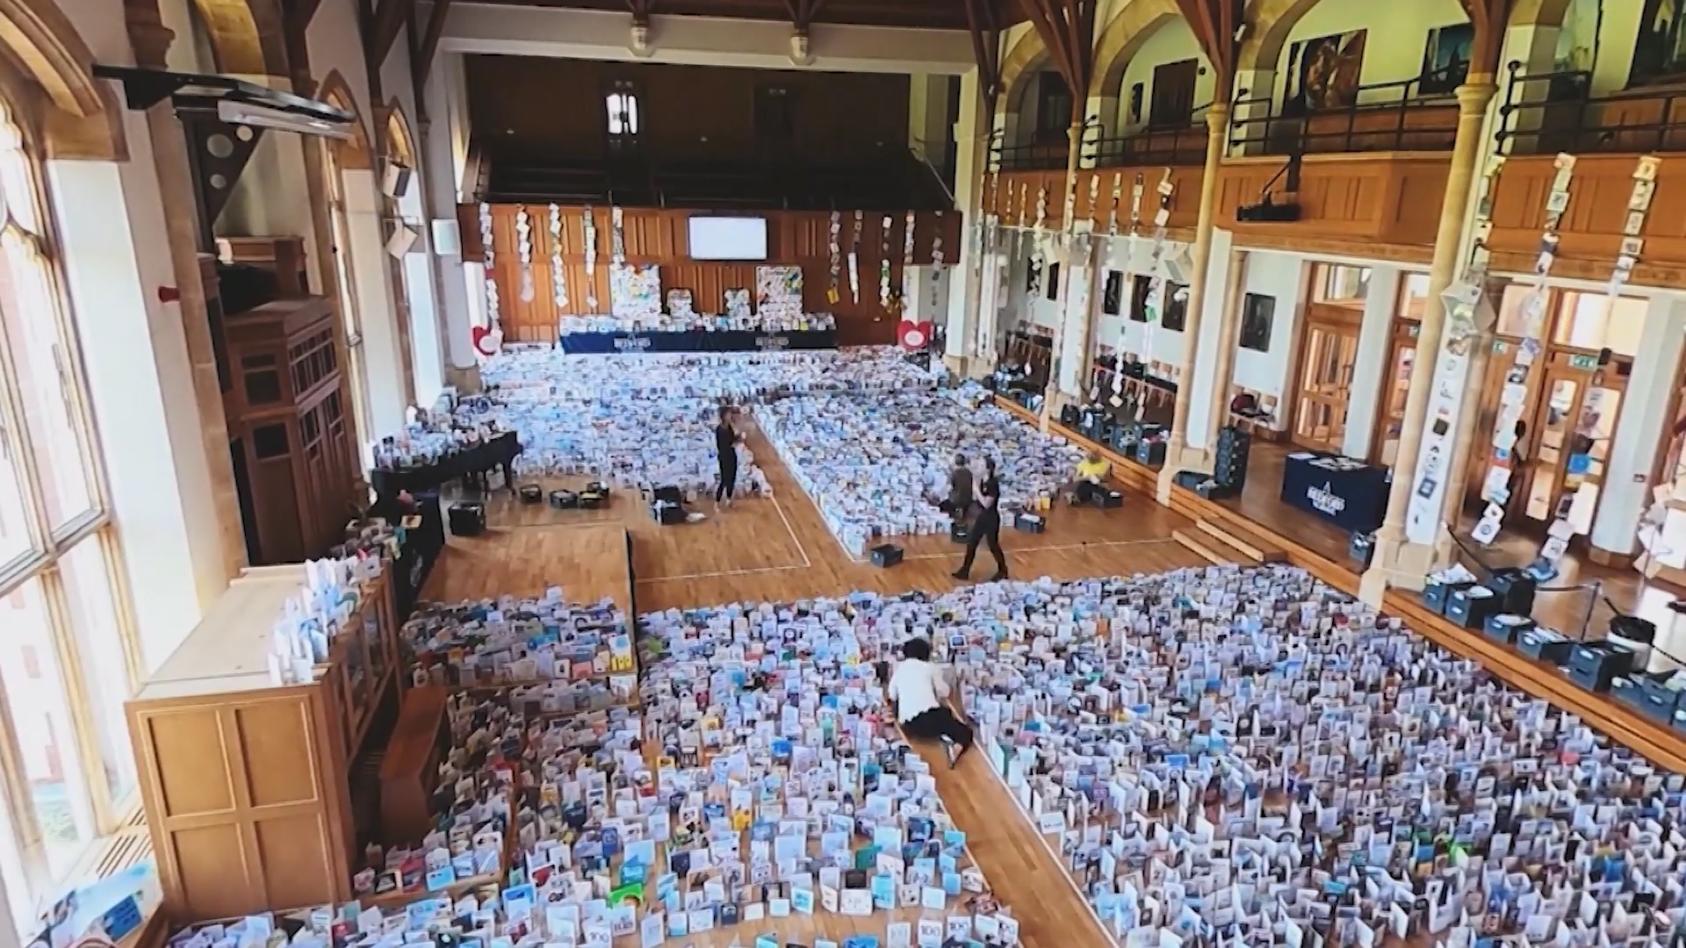 Britischer Rekord-Opa feiert 100 Gebutstag 125.000 Geburtstagskarten aus aller Welt